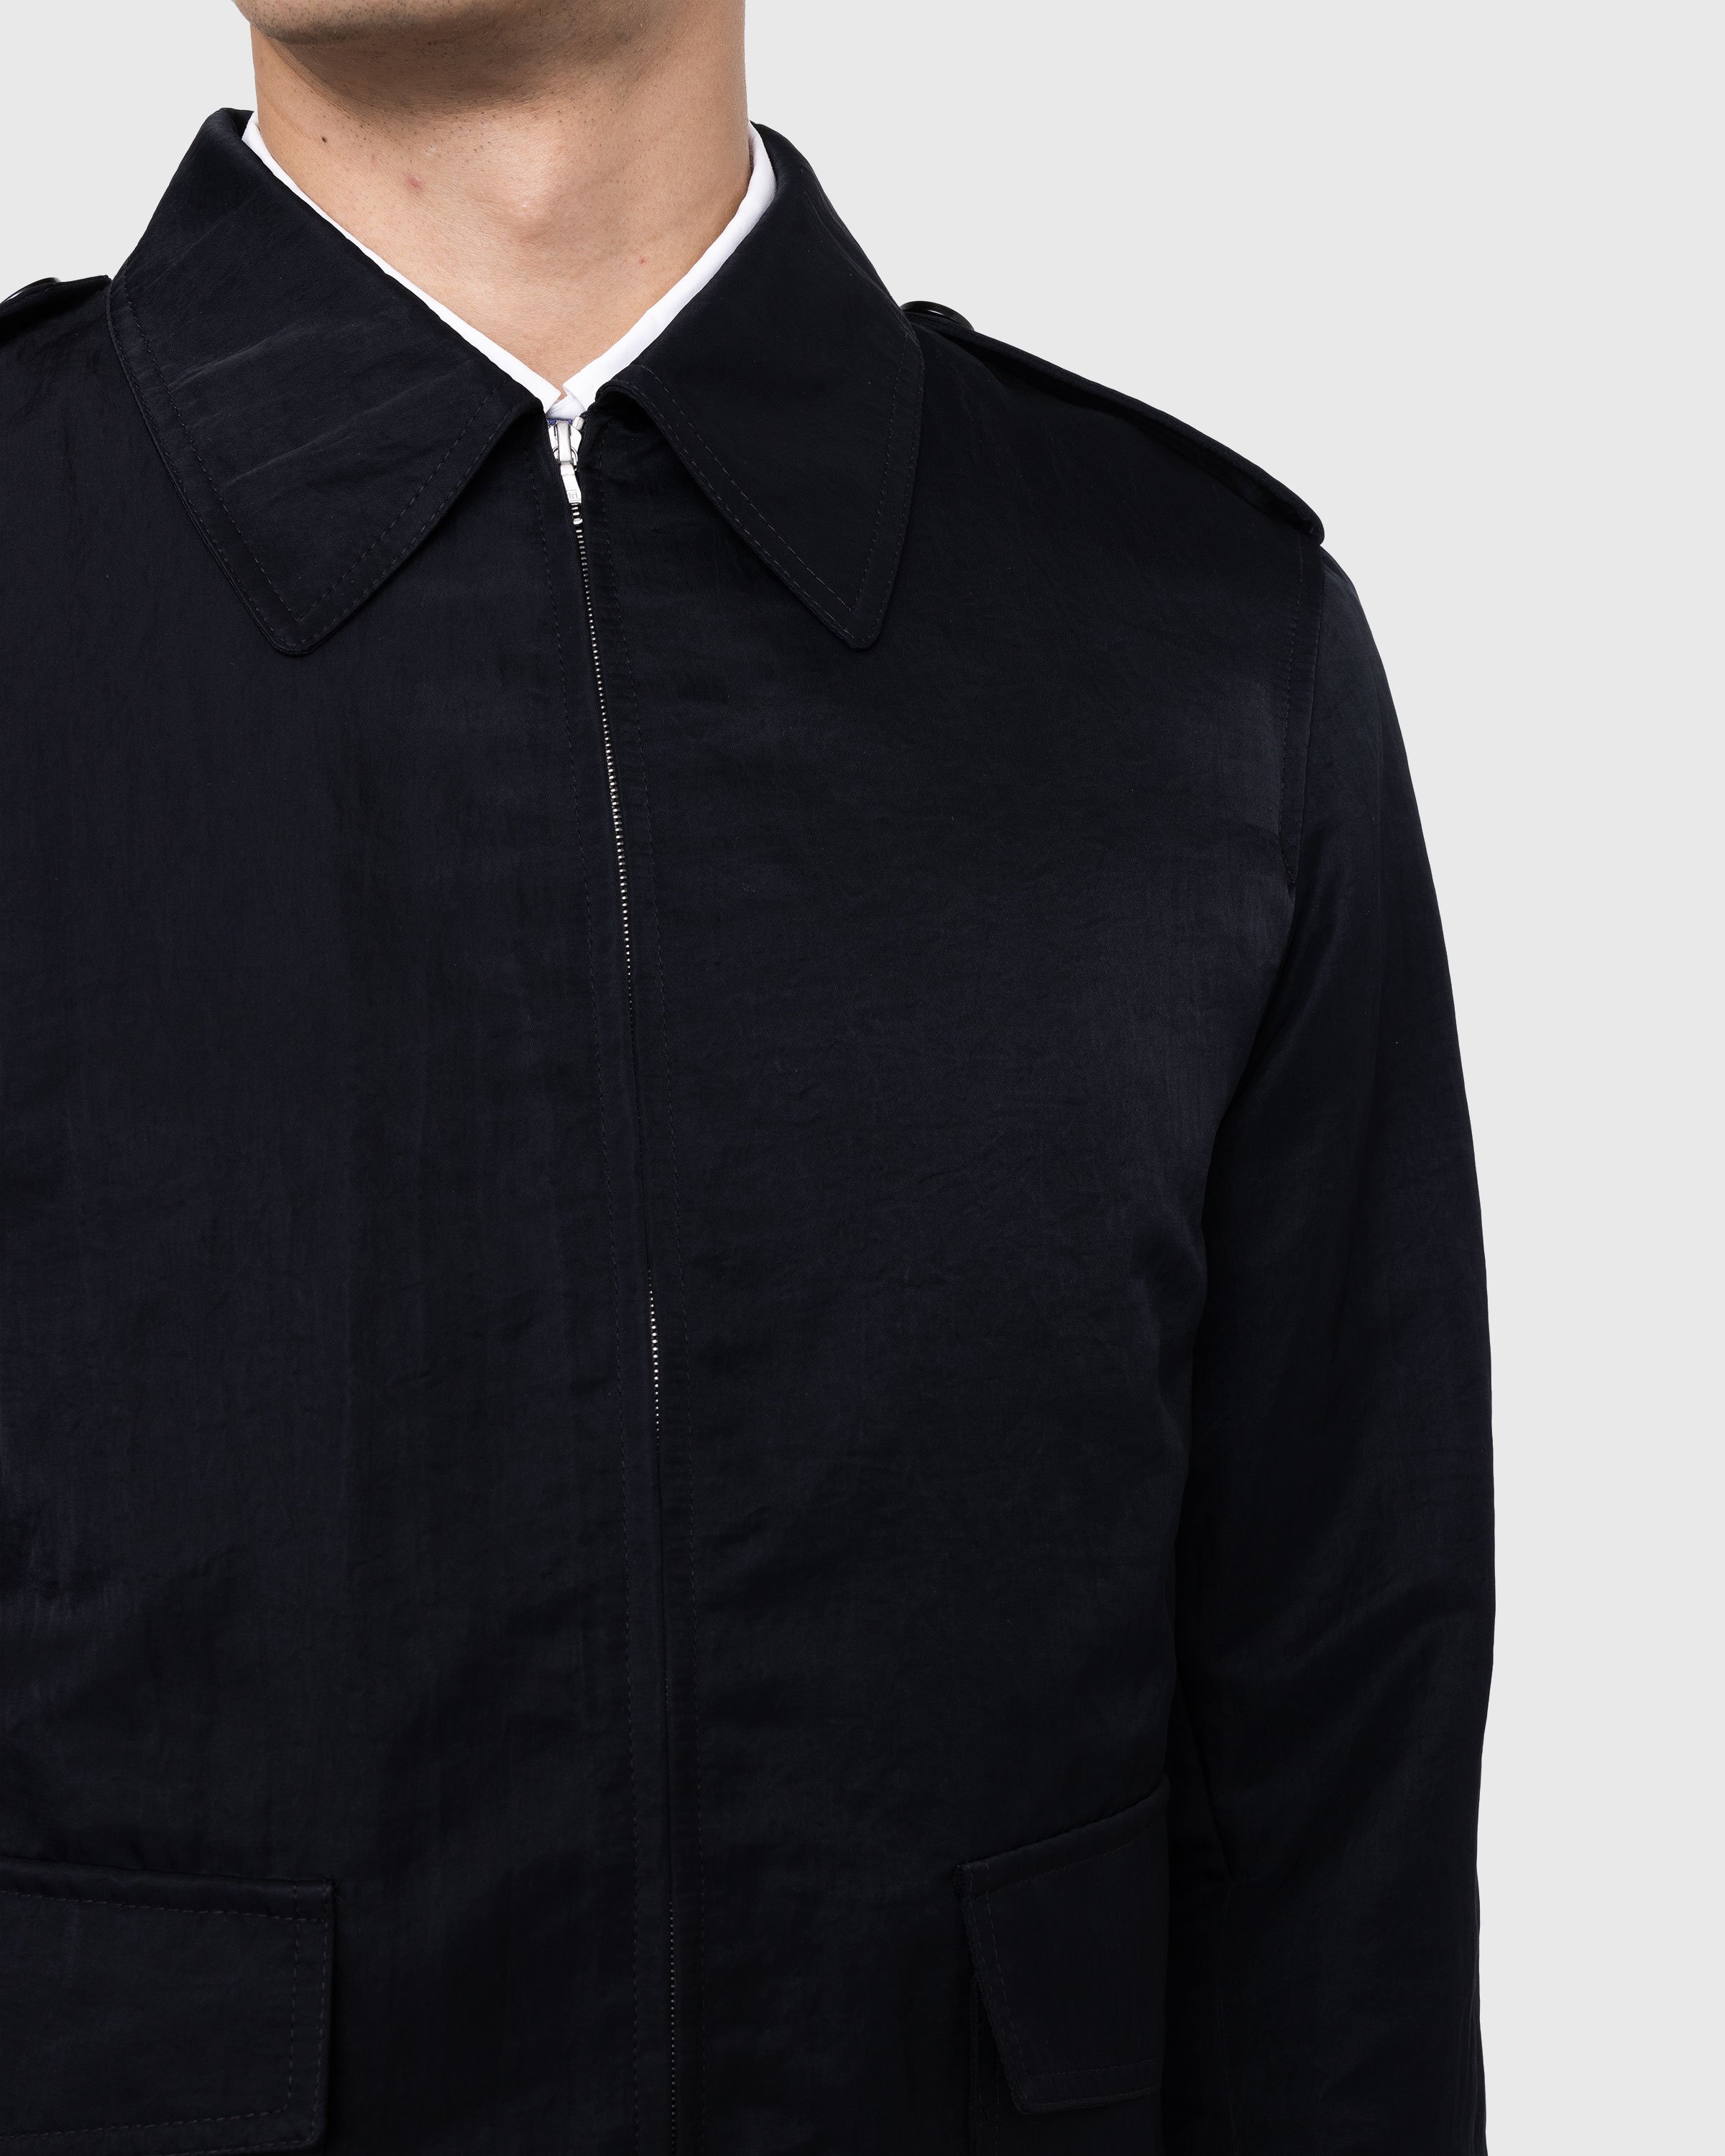 Dries van Noten - Vallow Jacket Black - Clothing - Black - Image 4